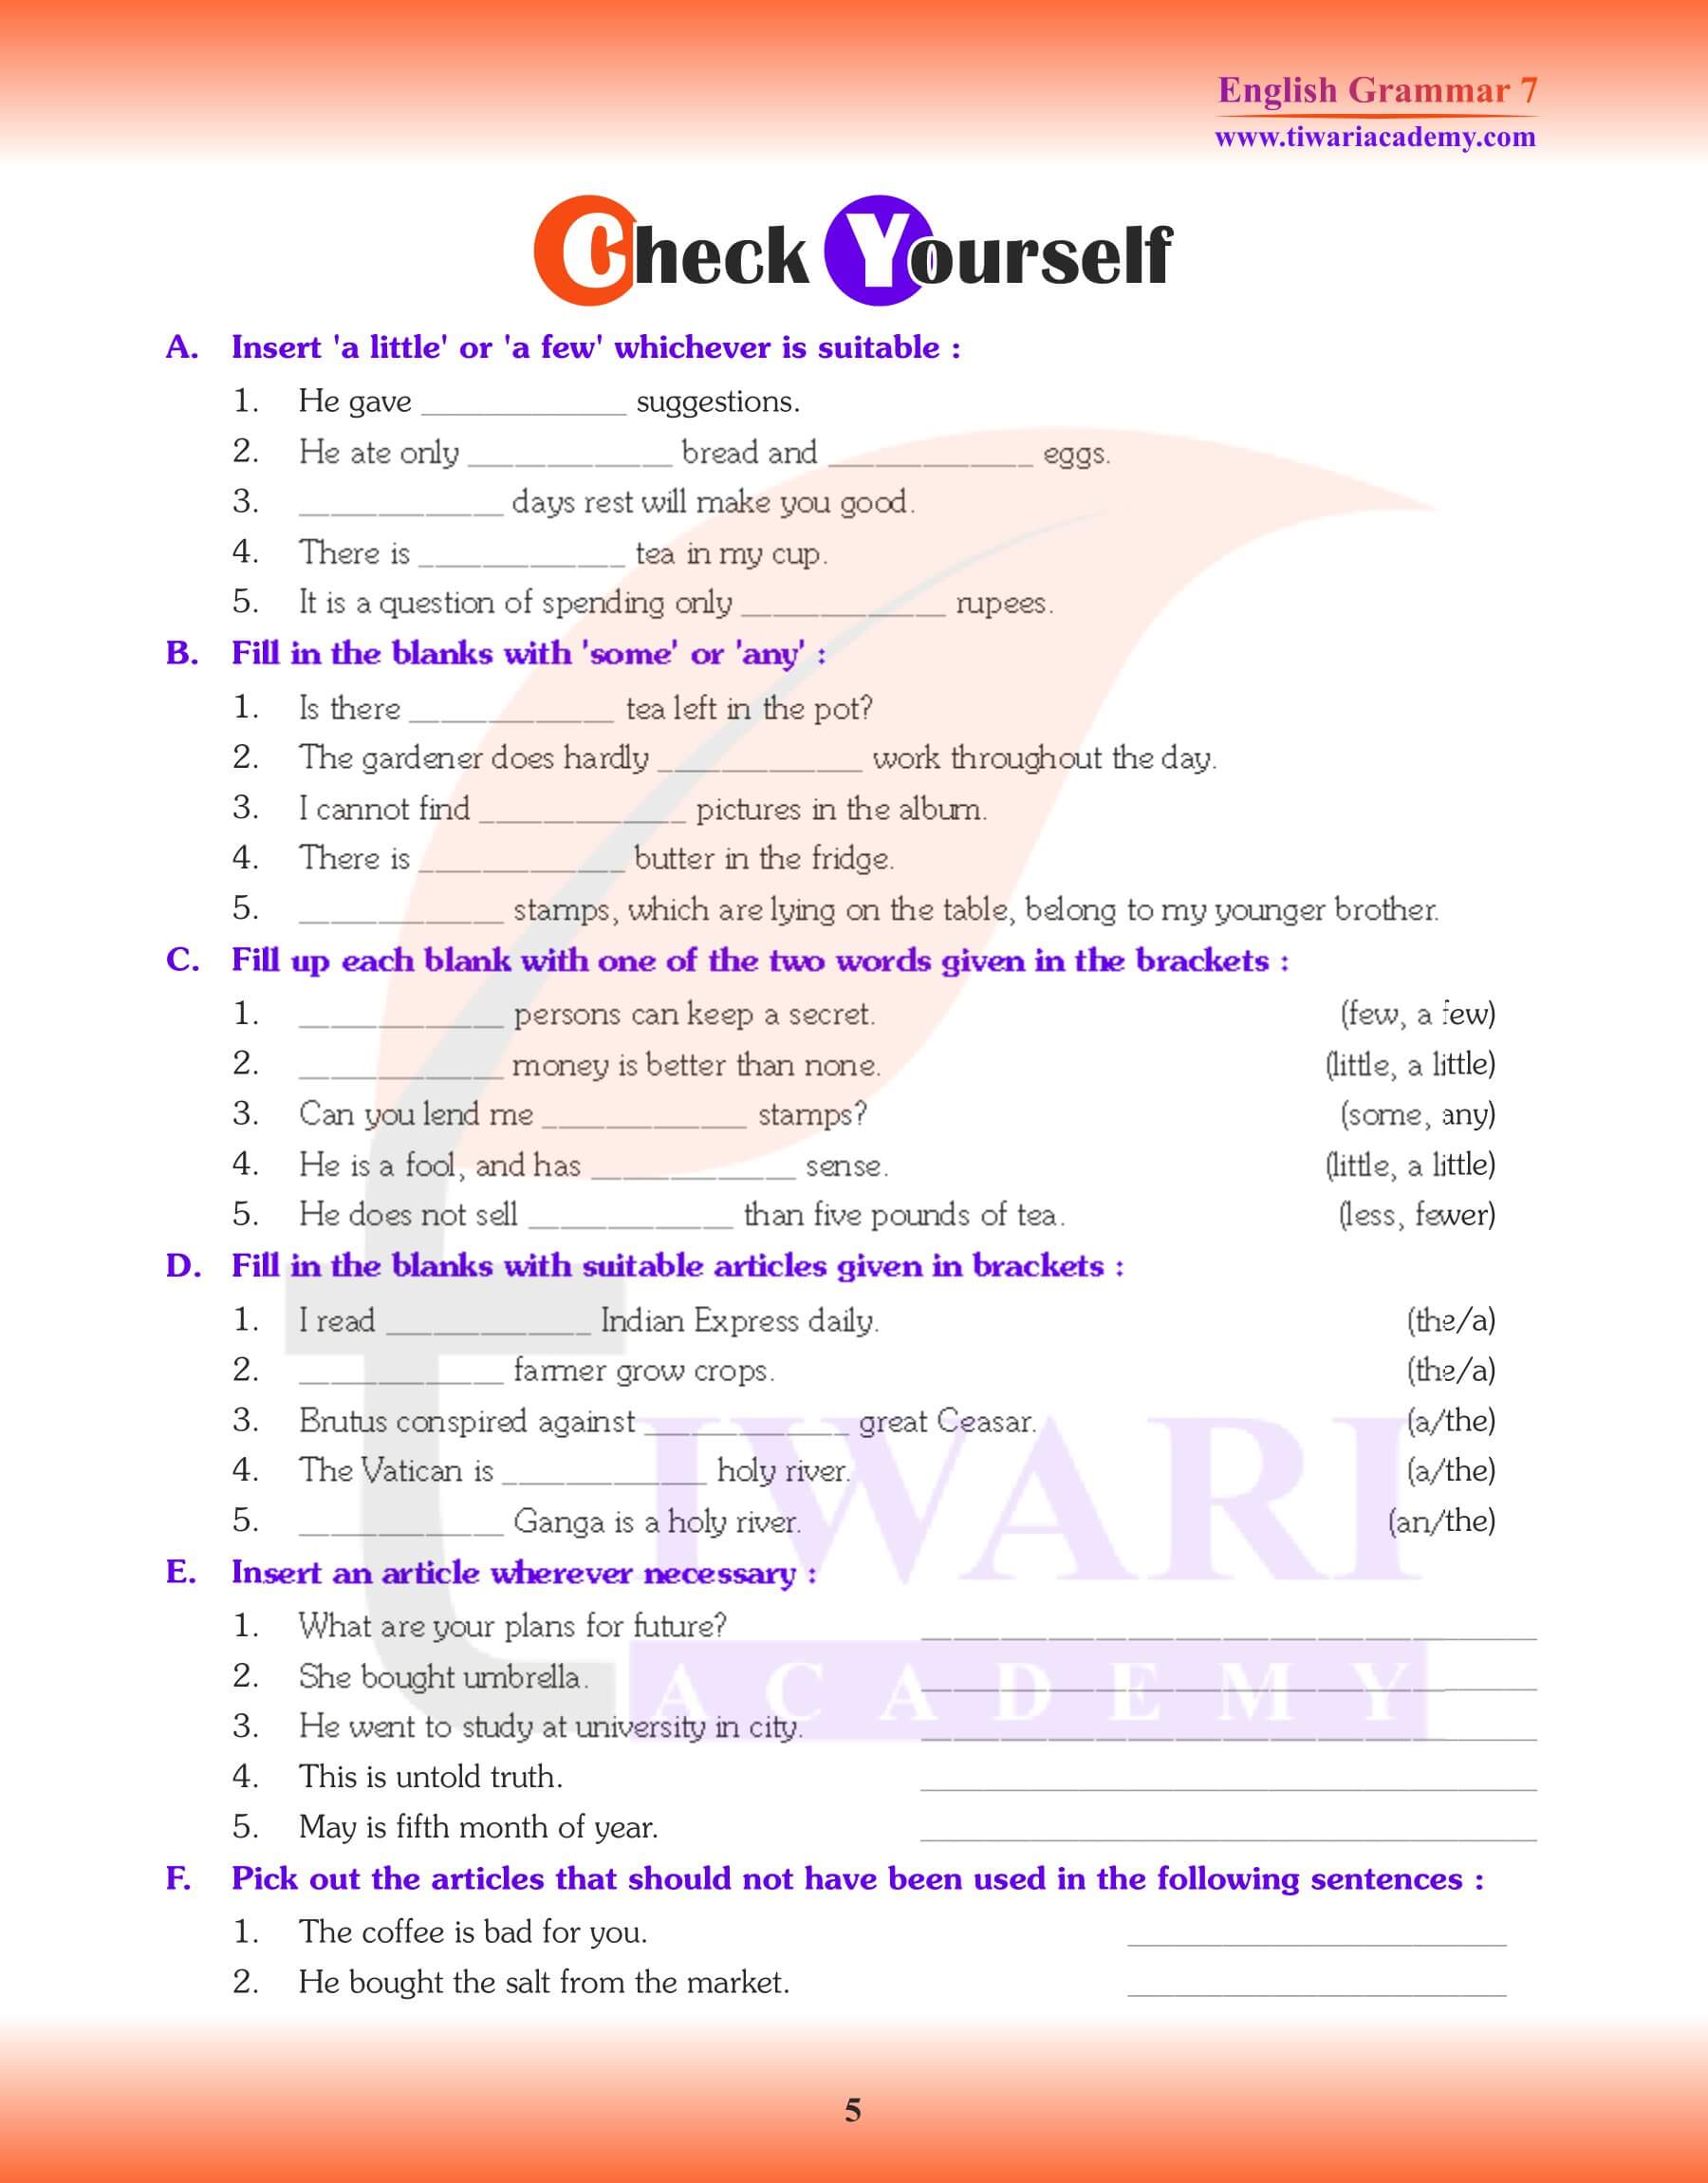 Class 7 English Grammar Chapter 6 study material